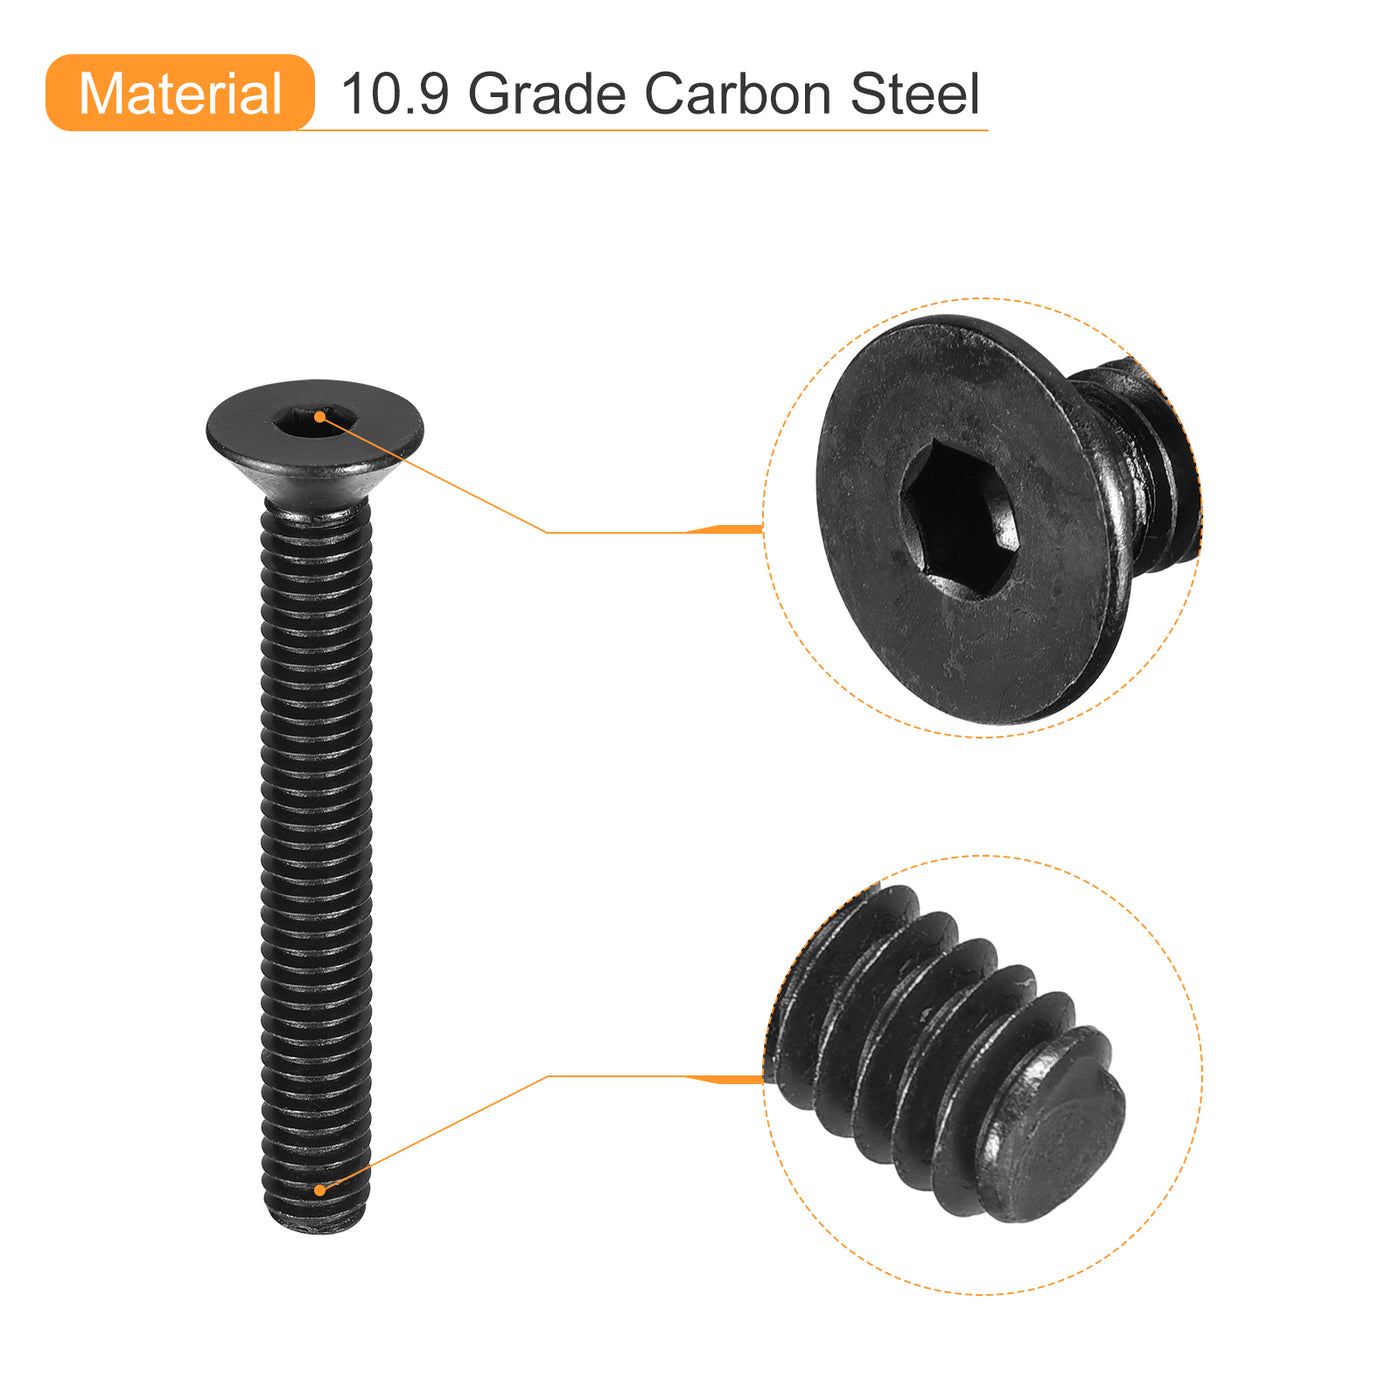 uxcell Uxcell 5/16-18x2-1/2" Flat Head Socket Cap Screws, 10.9 Grade Carbon Steel, 10PCS